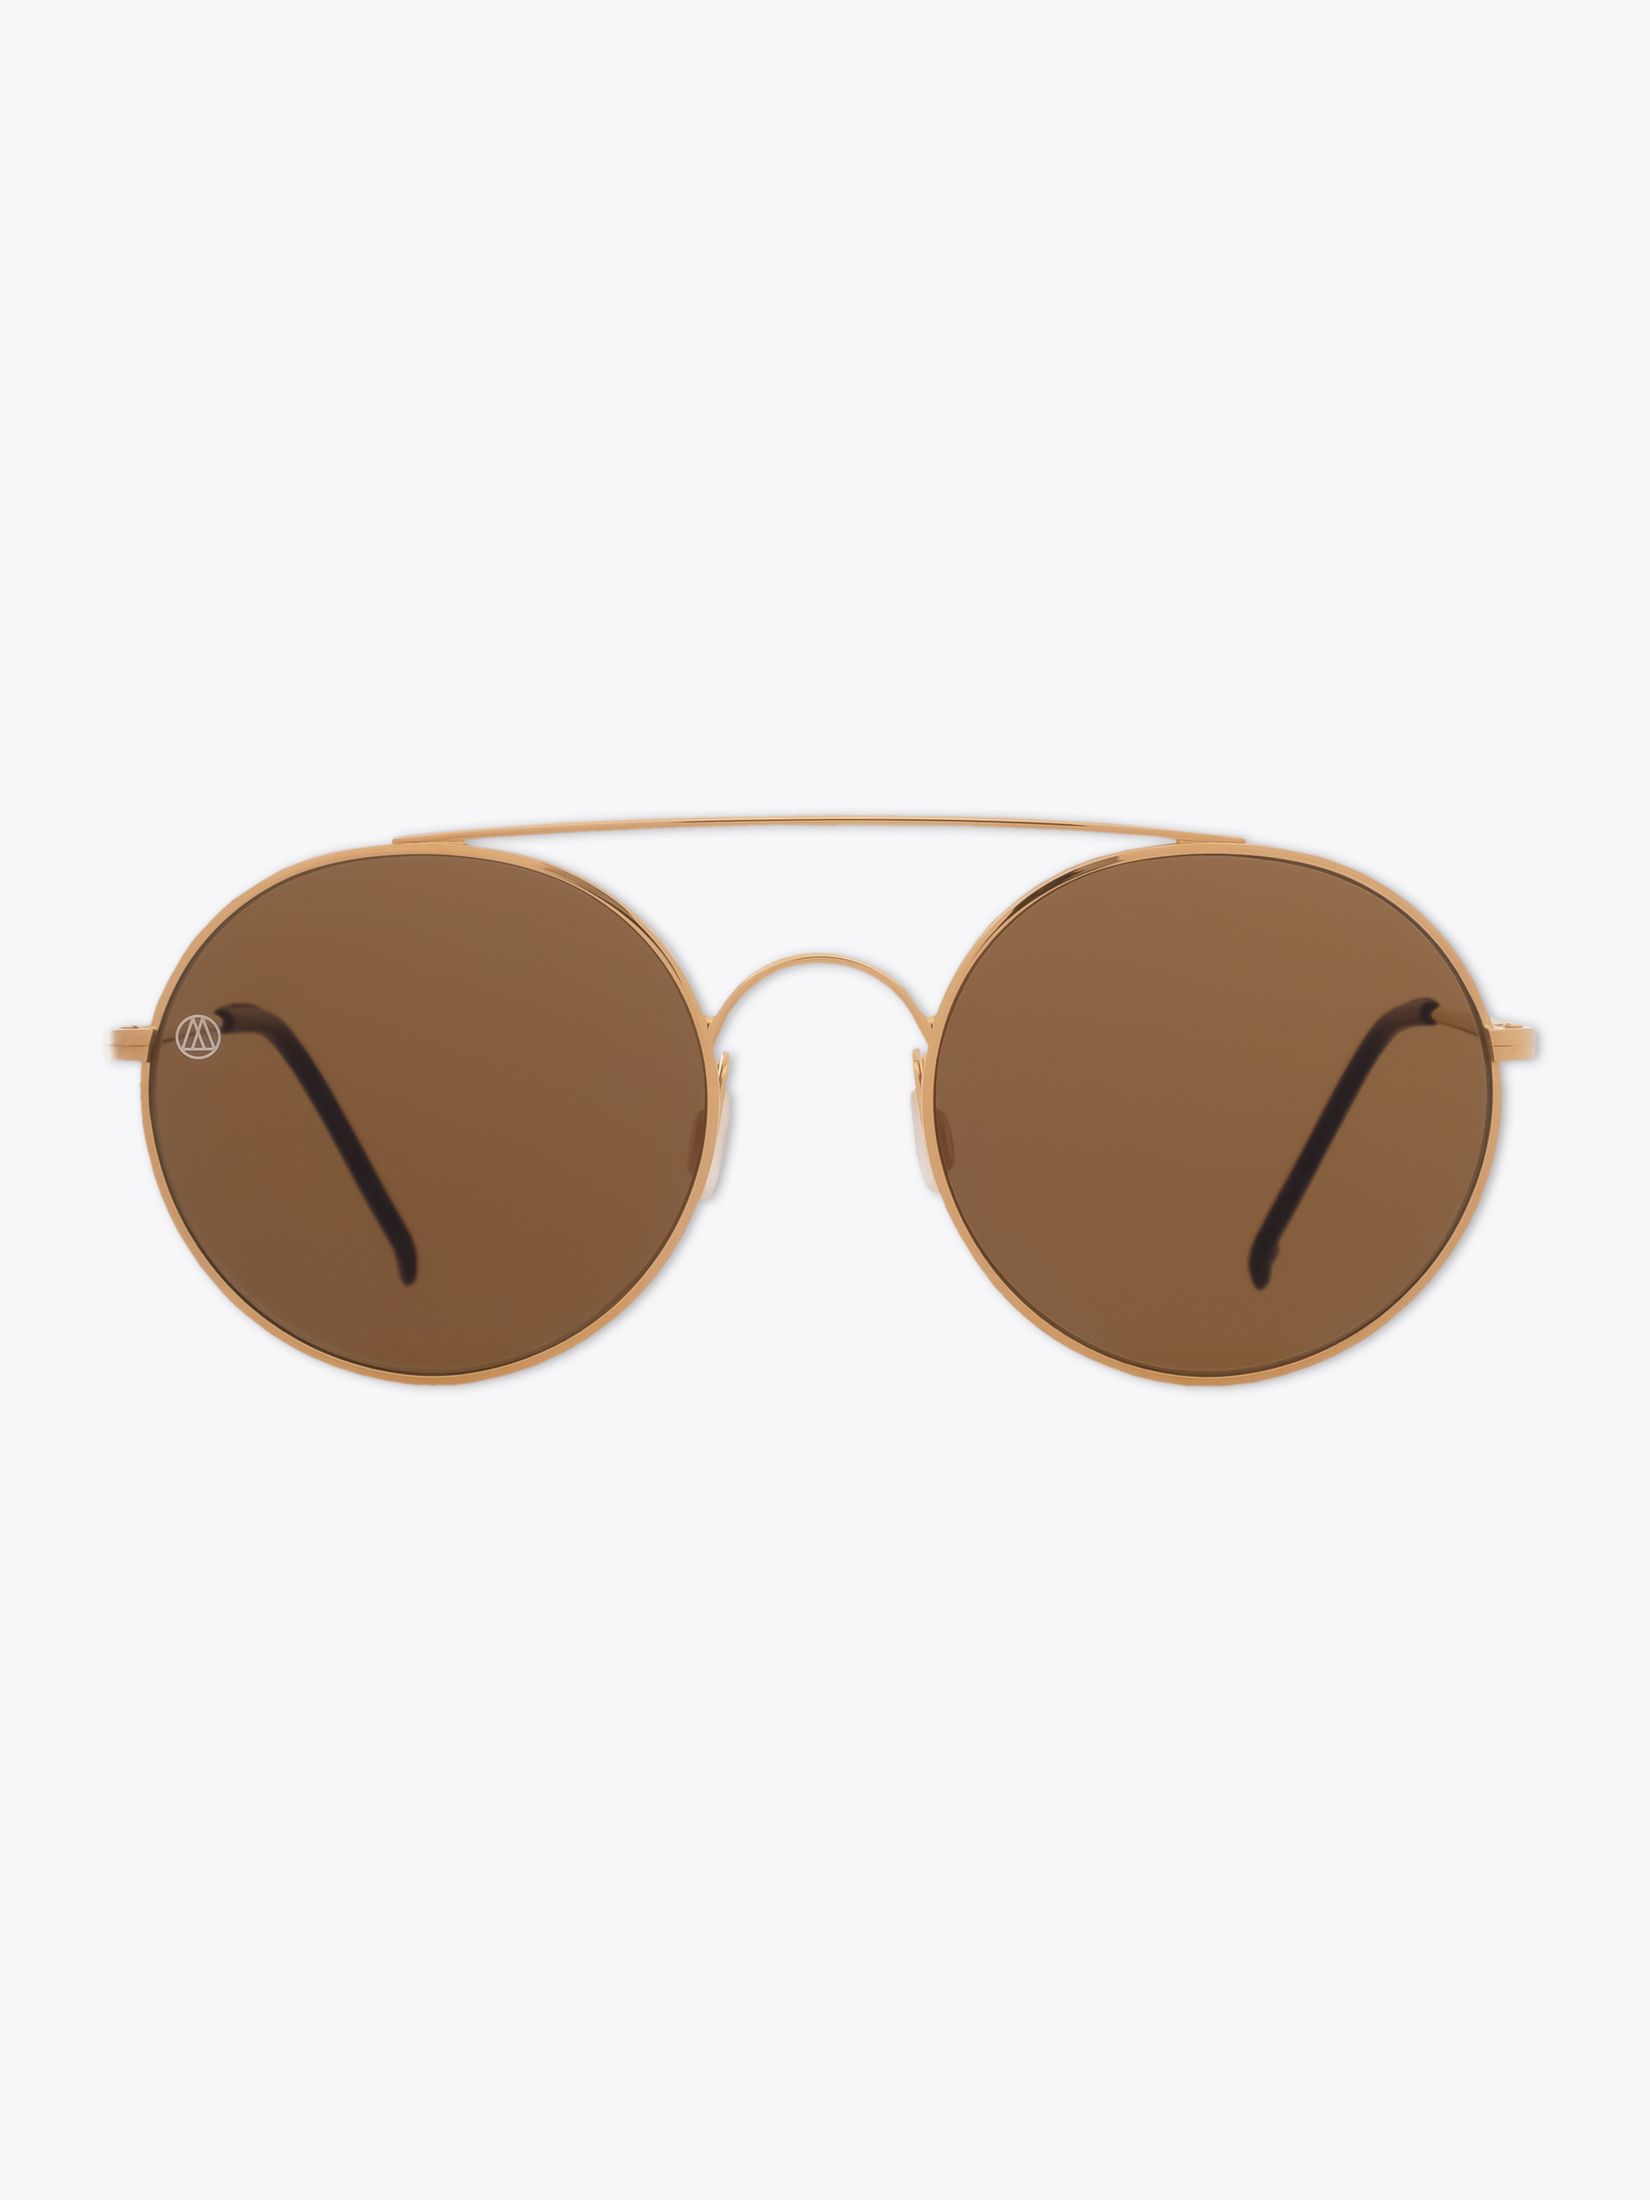 Jinx Burgundy Sunglasses - Oval Shaped Sunglasses | MOEVA Moeva